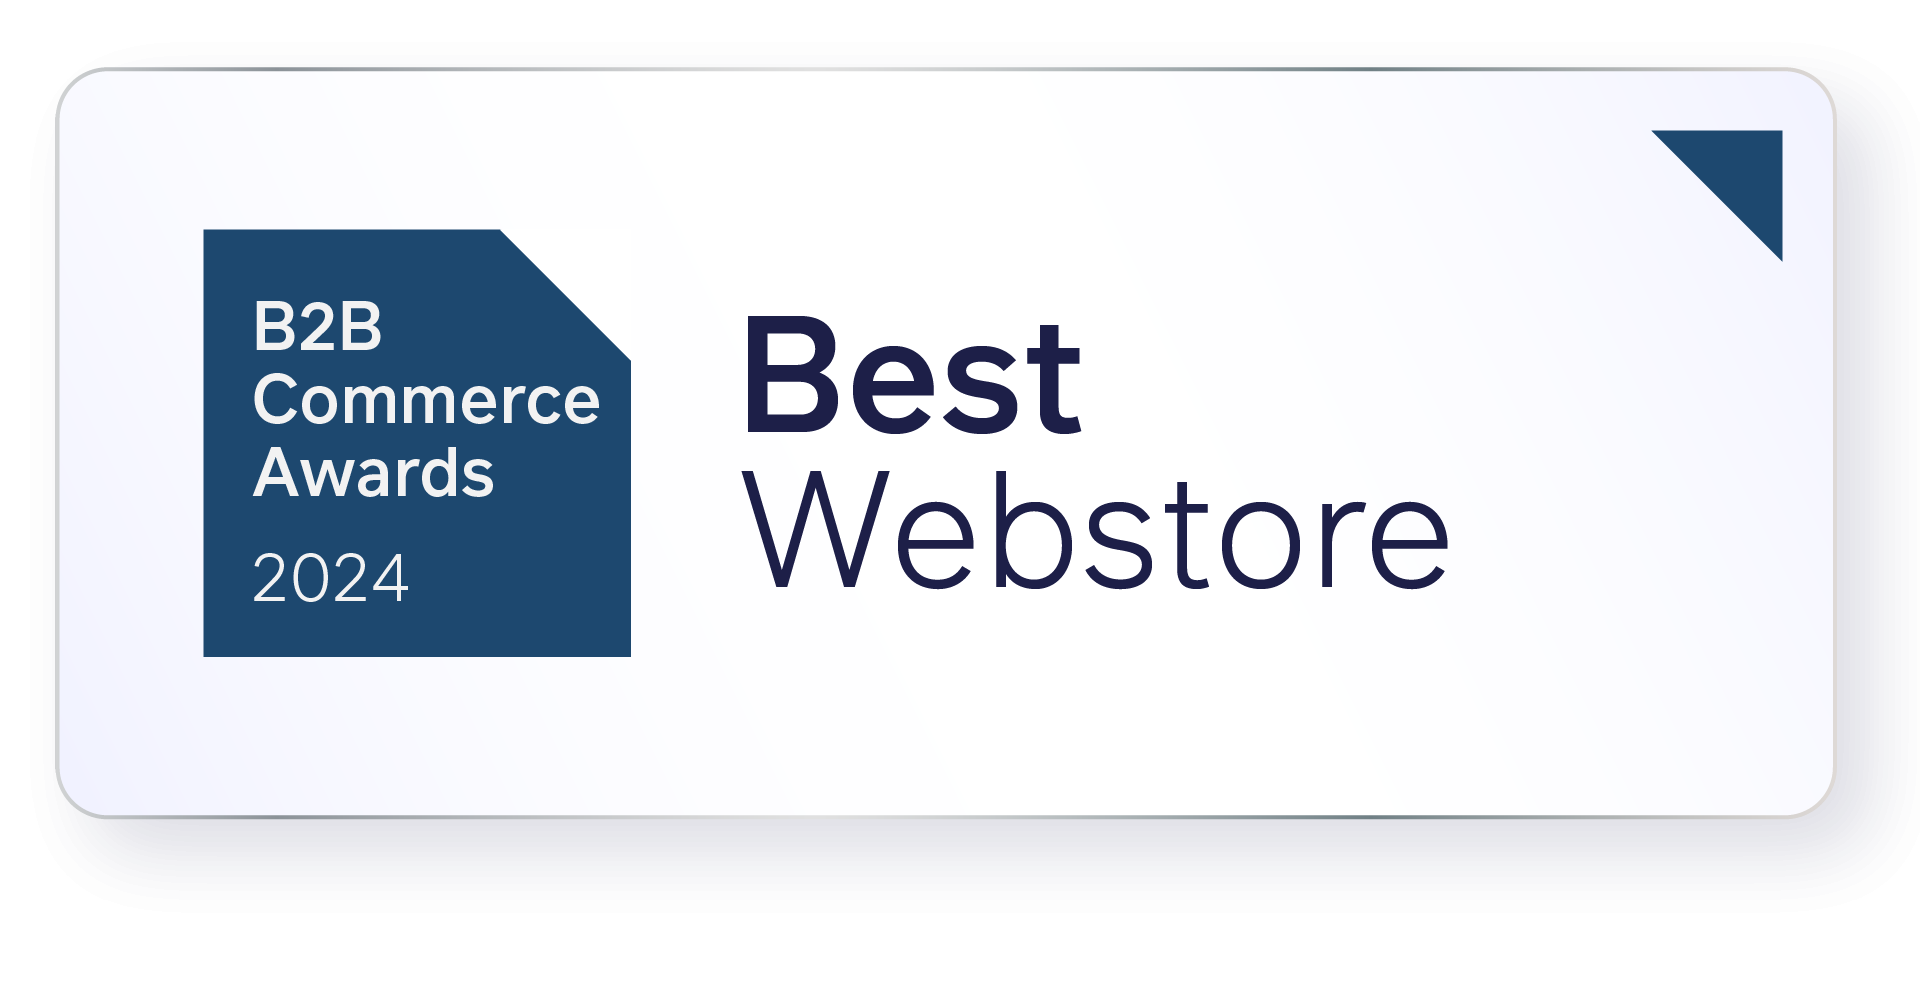 e-commerce awards best webstore